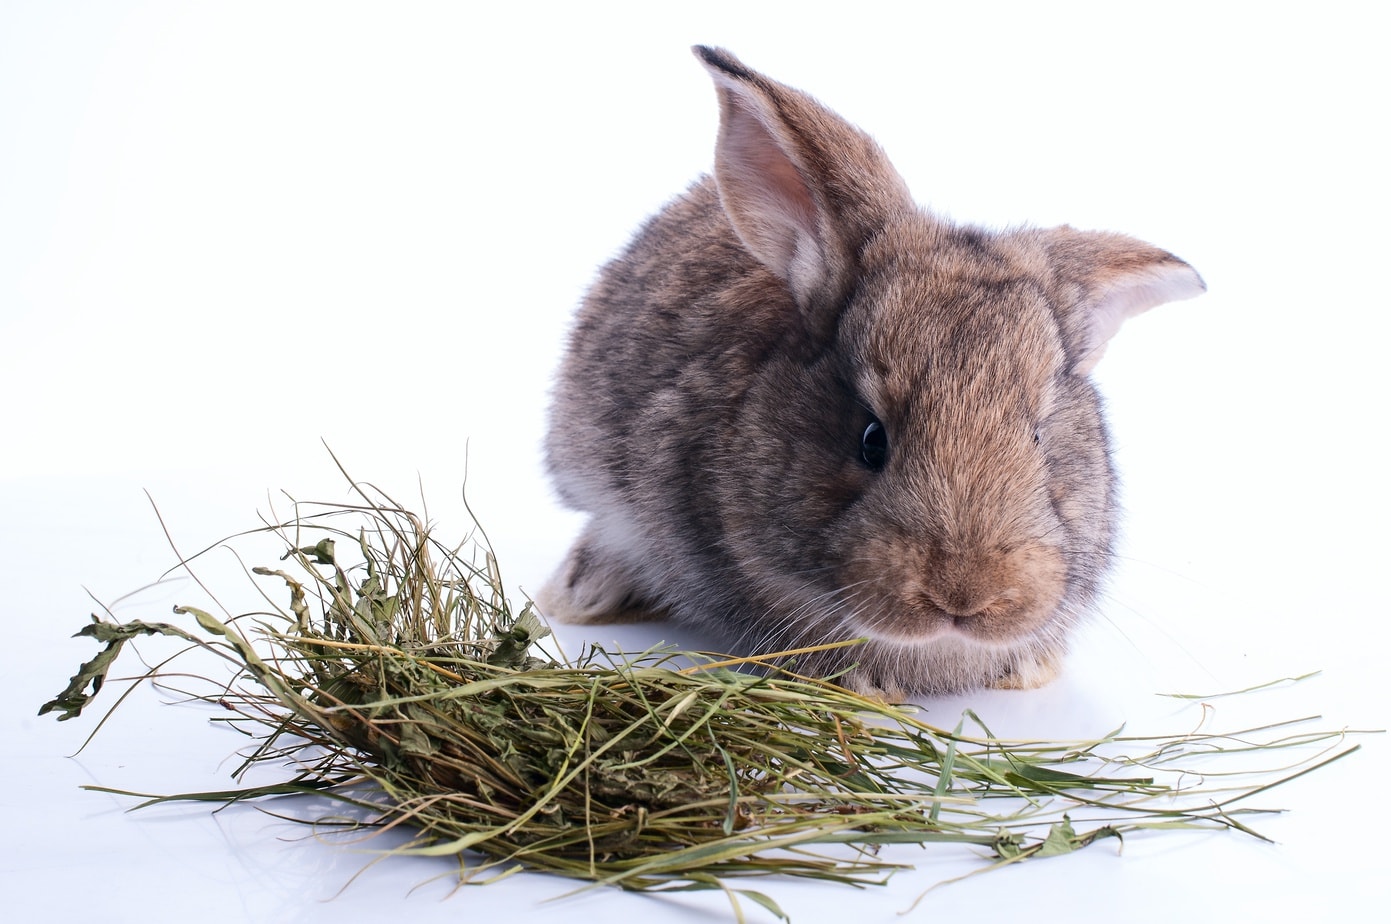 Treatment Options For Rabbit Diarrhea